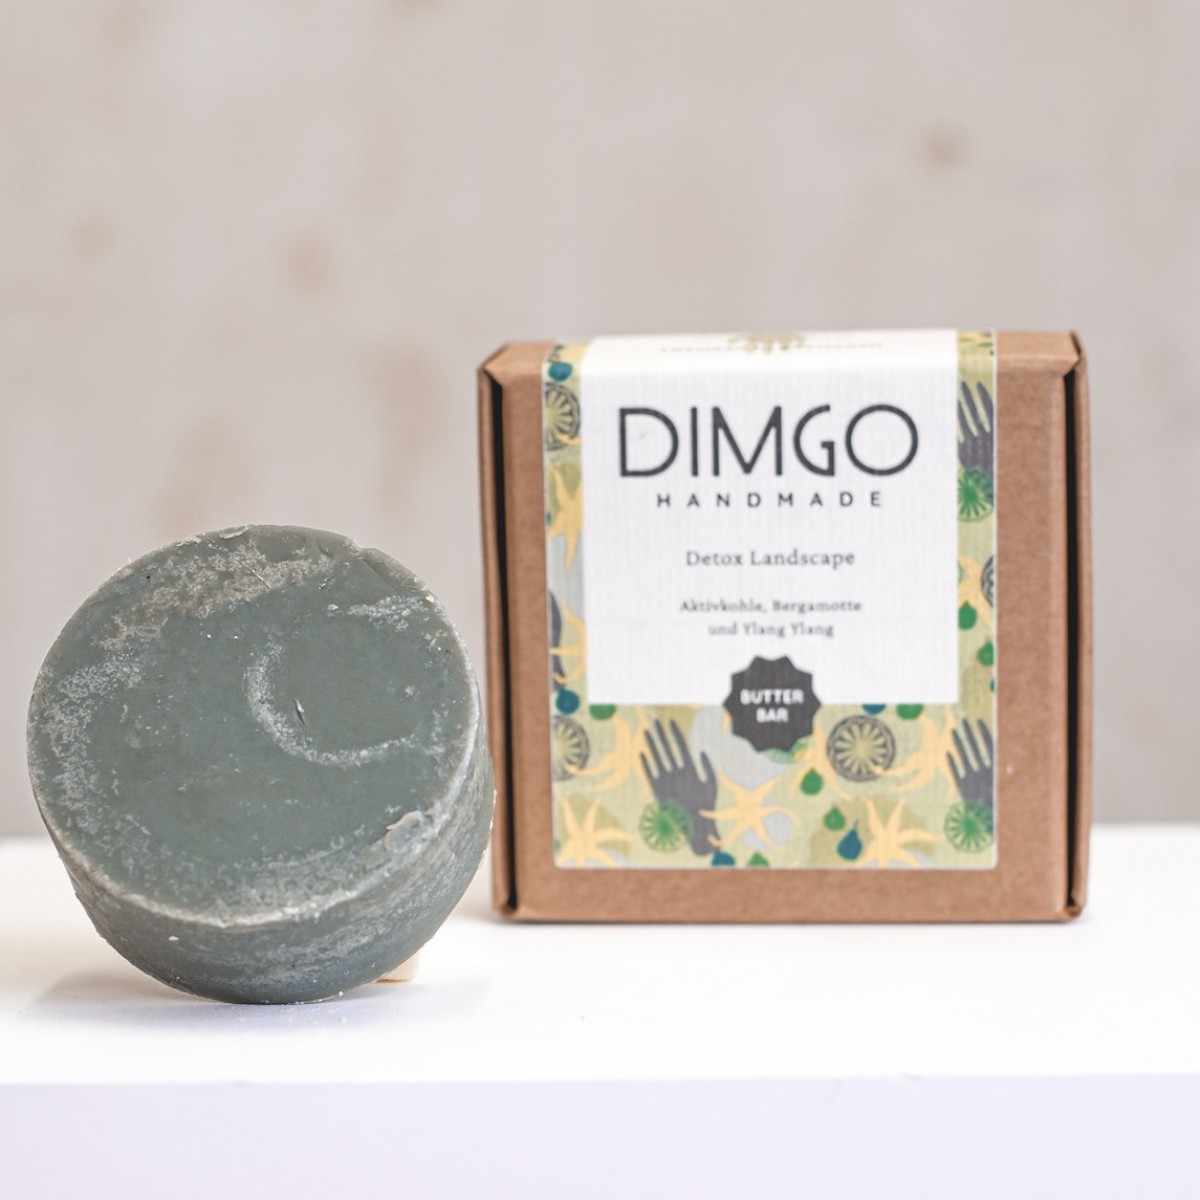 DIMGO - Butterbar 50g - Detox Landscape